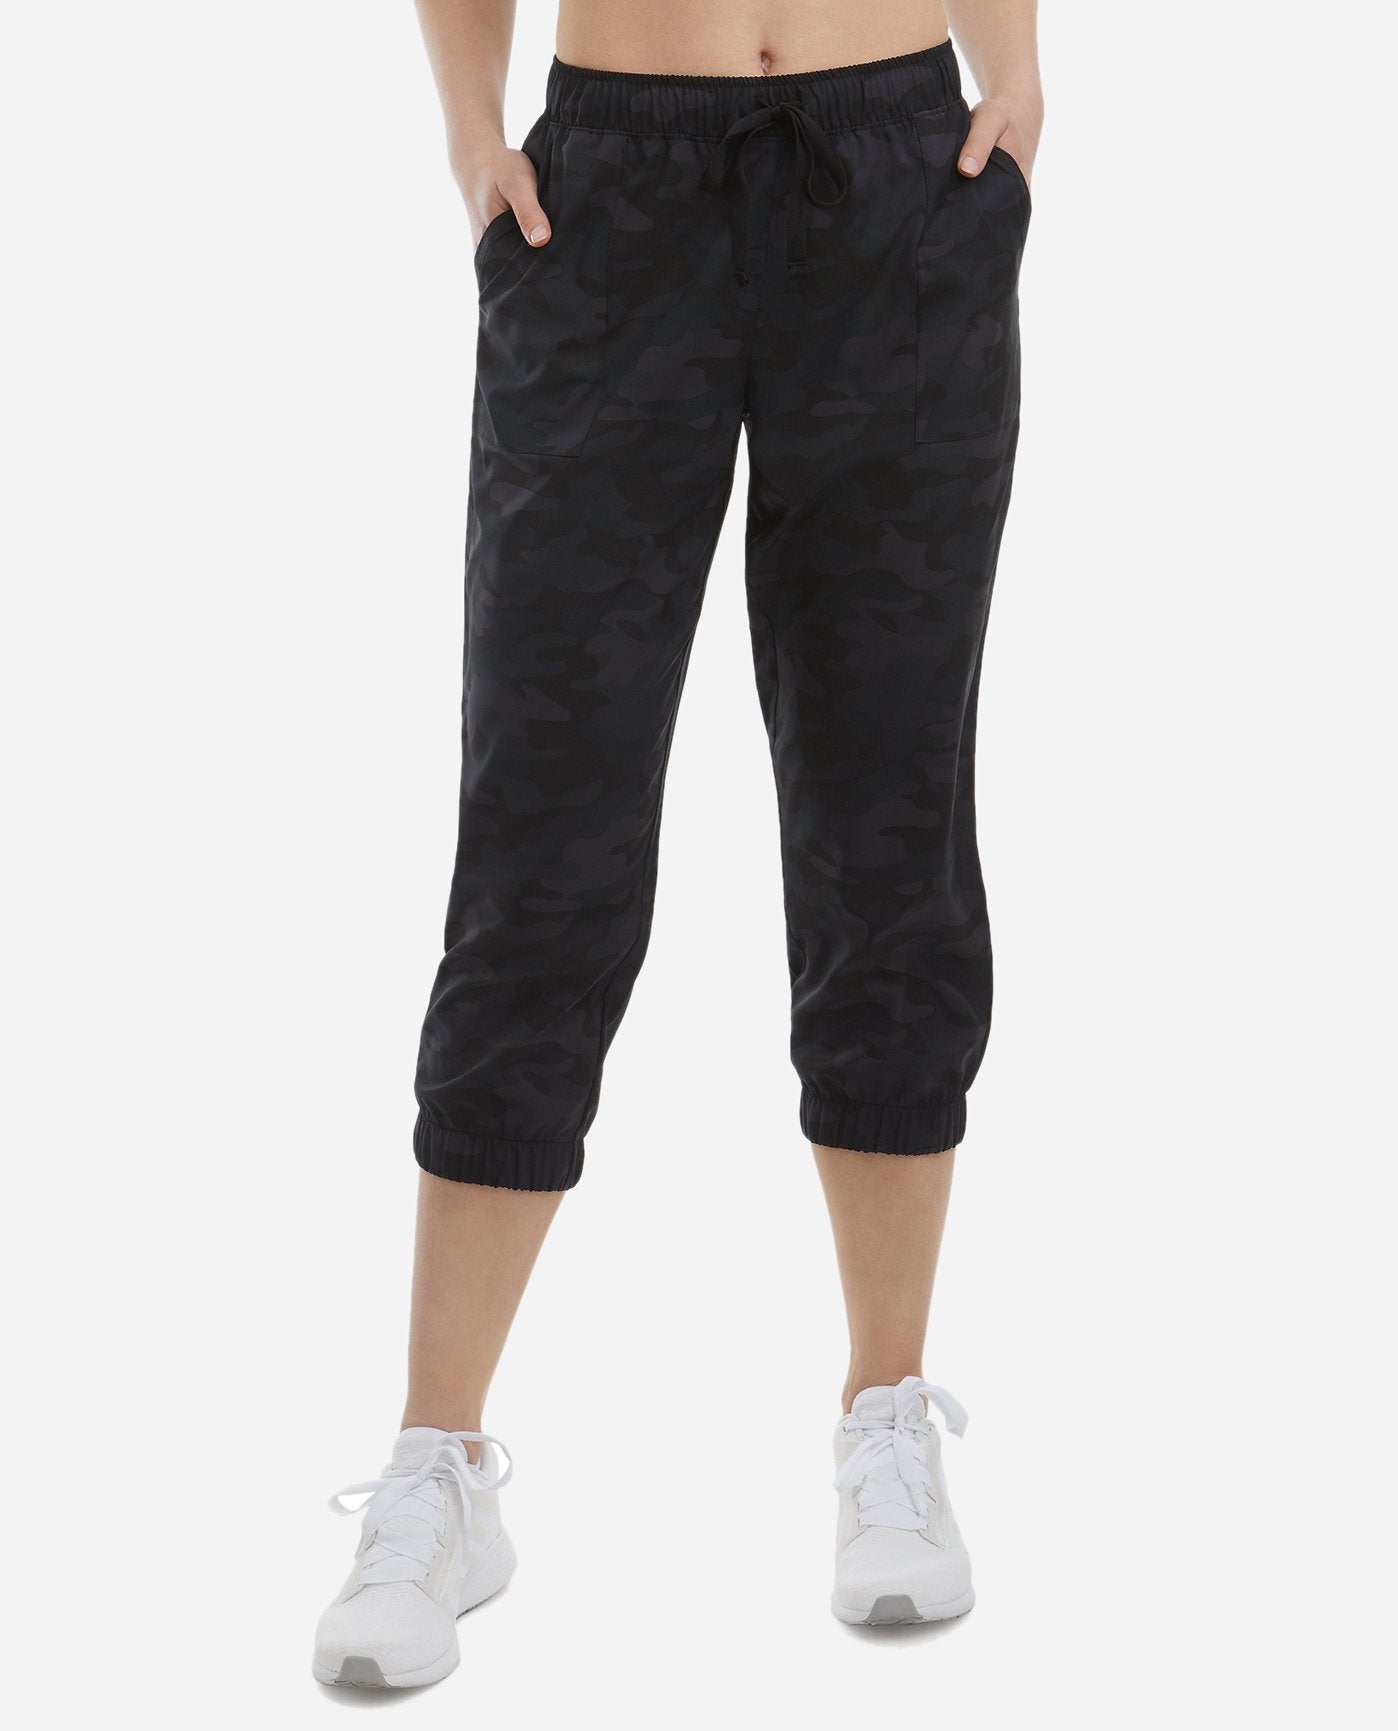 Danskin Women's Drawcord Crop Pant, Black, X-Small 